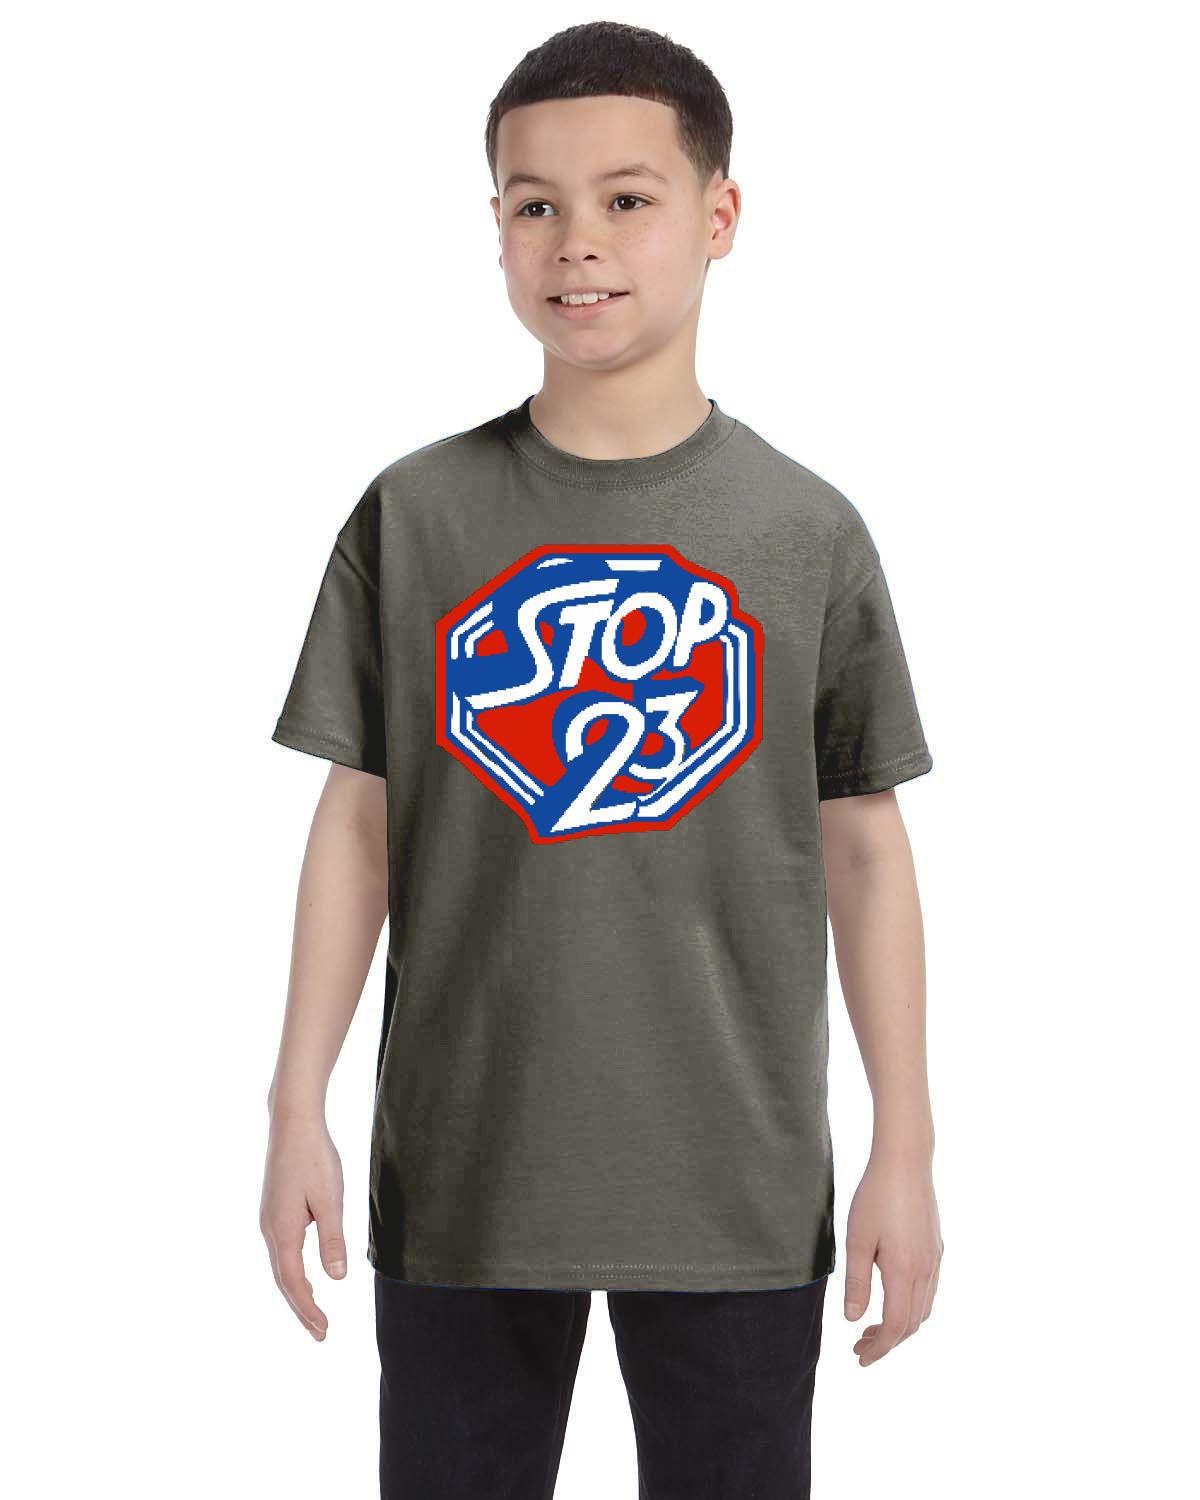 Stop 23 Kid's T-Shirt